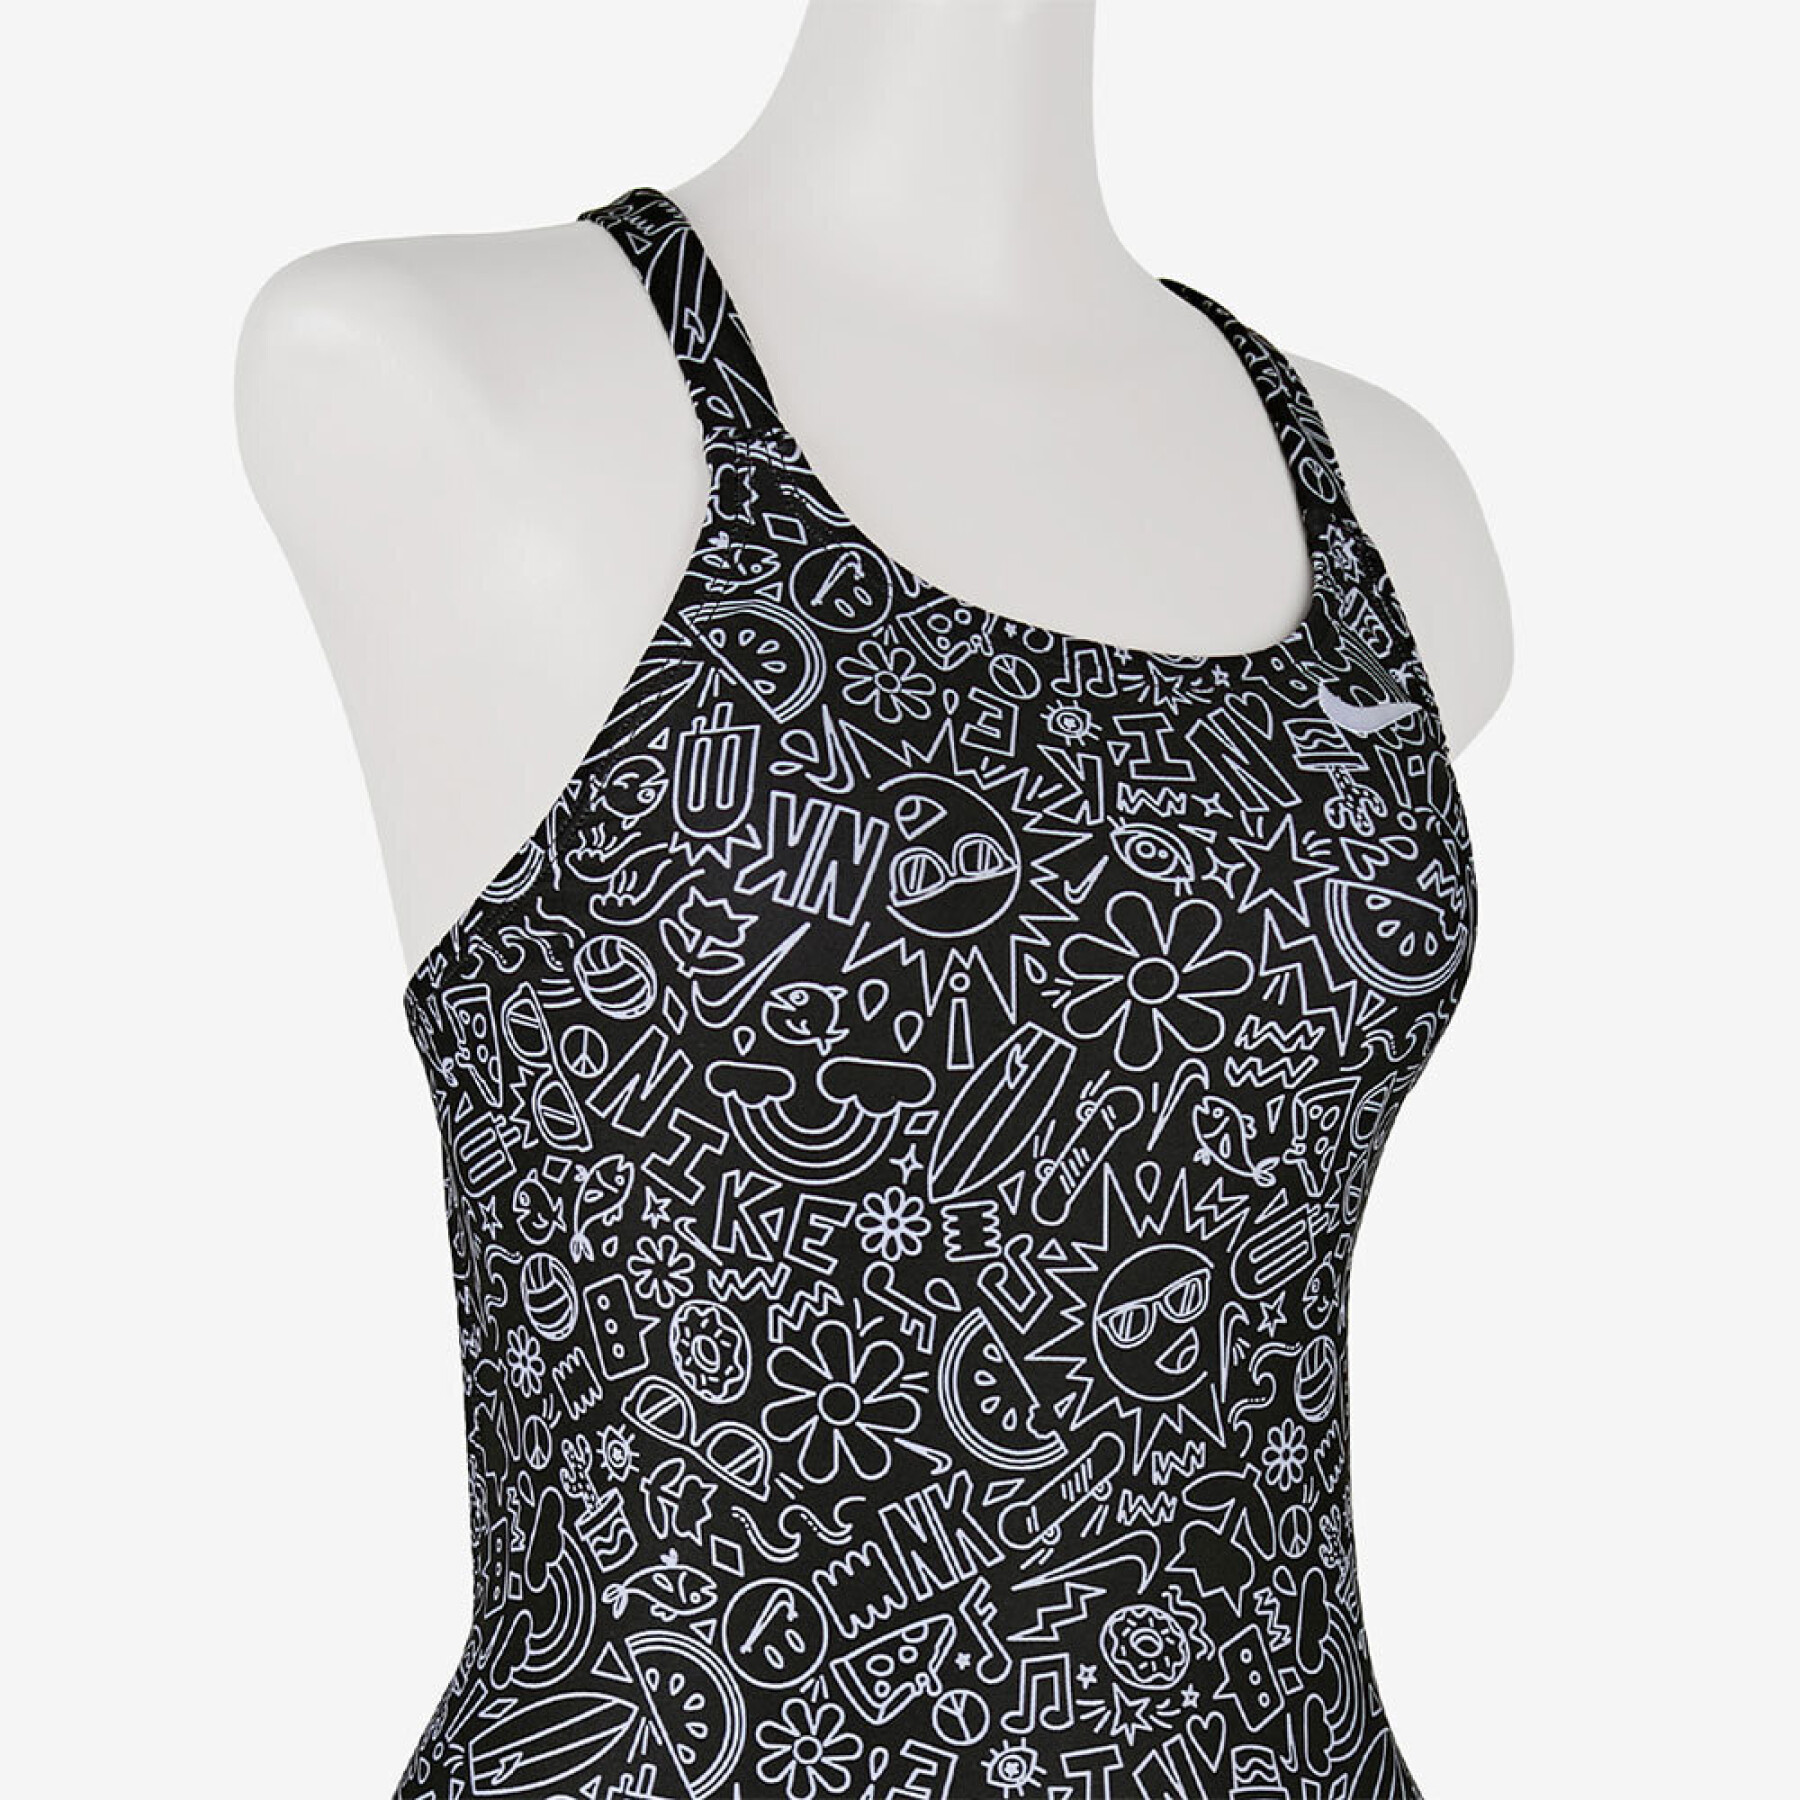 Women's 1-piece swimsuit Nike Hydrastrong Multi Print